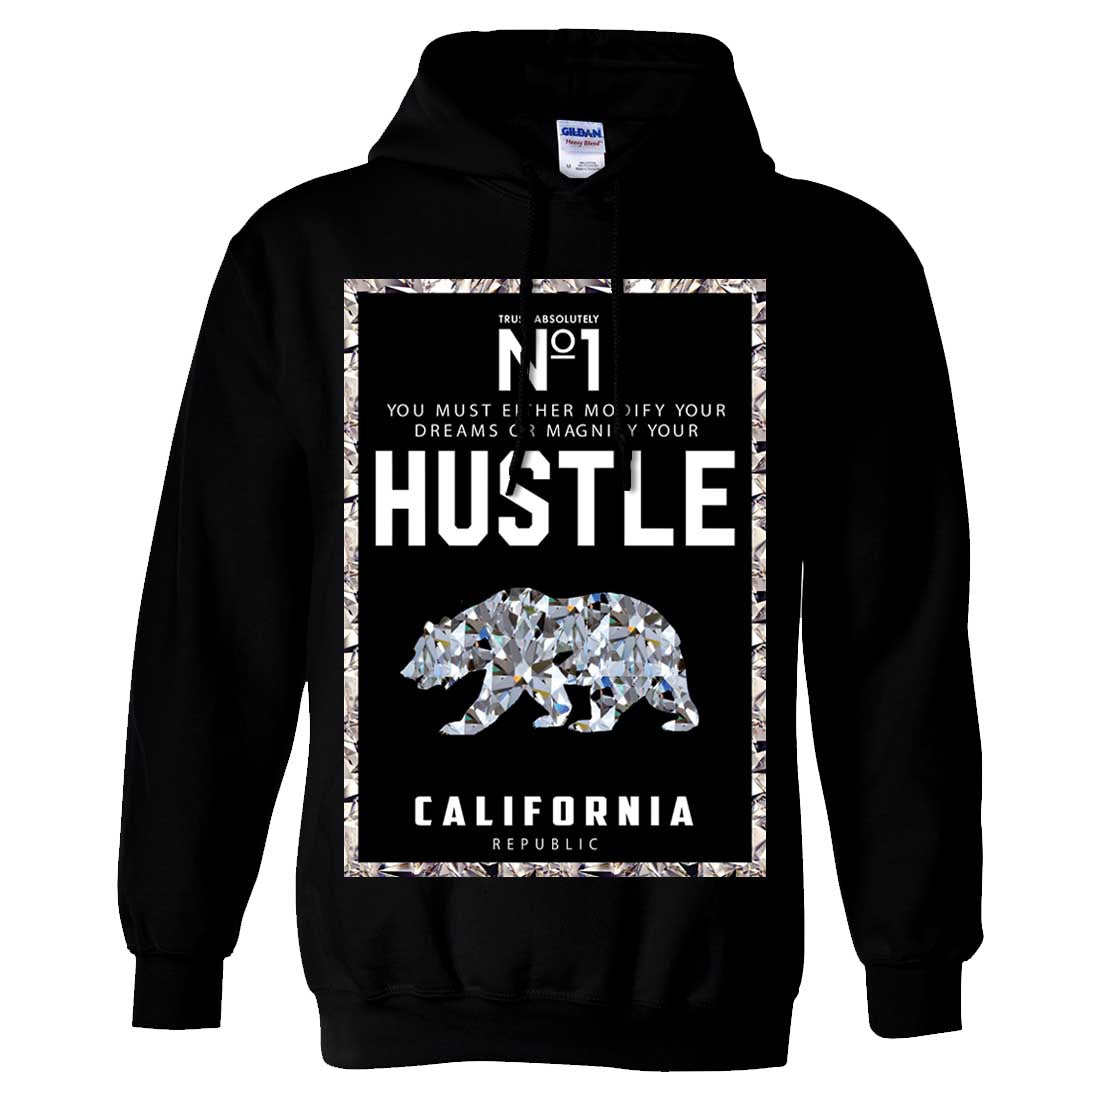 California Republic No. 1 Diamond Hustle Sweatshirt Hoodie